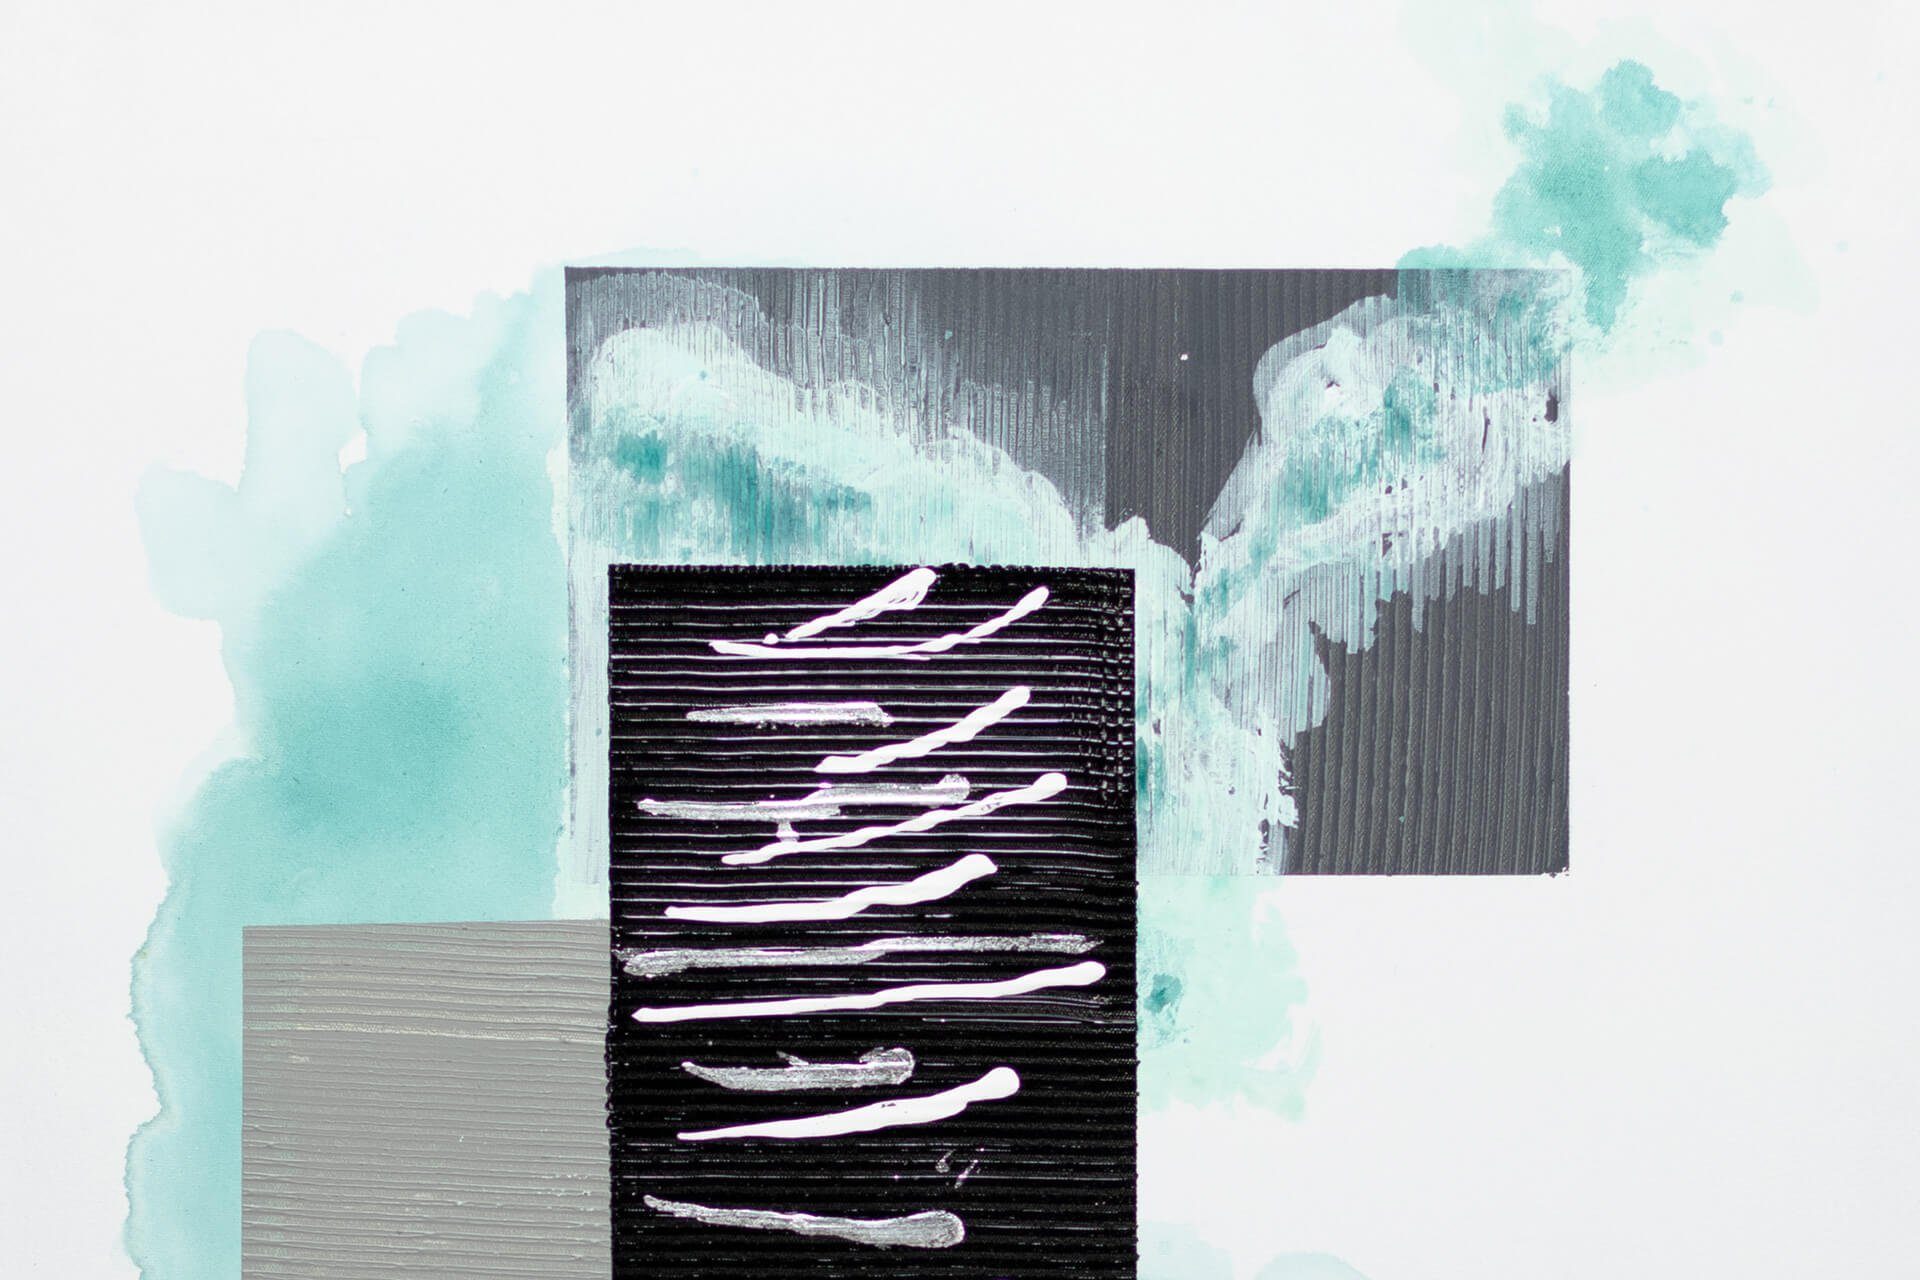 100% Wandbild Cloudy cm, 60x80 Leinwandbild HANDGEMALT Wohnzimmer Gemälde KUNSTLOFT Interaction